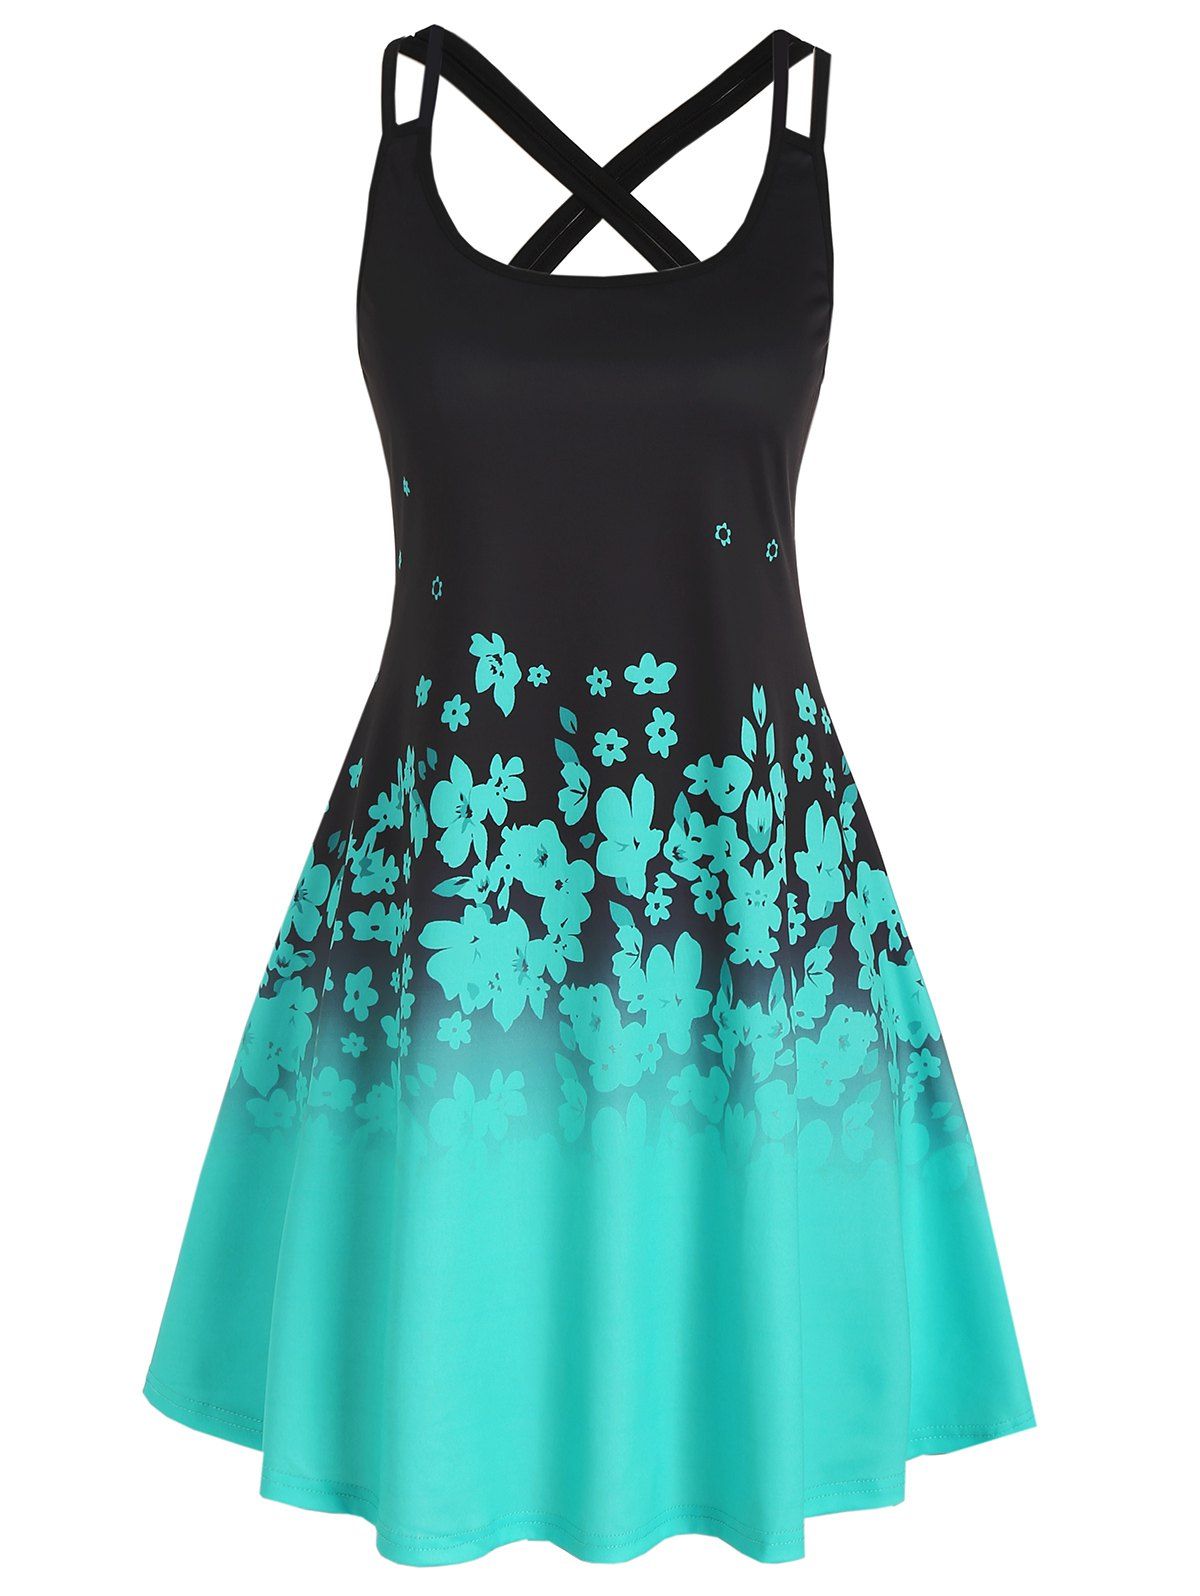 Ombre Floral Print Dress Strappy Cross Back Mini Dress Vacation A Line Dress - GREEN L